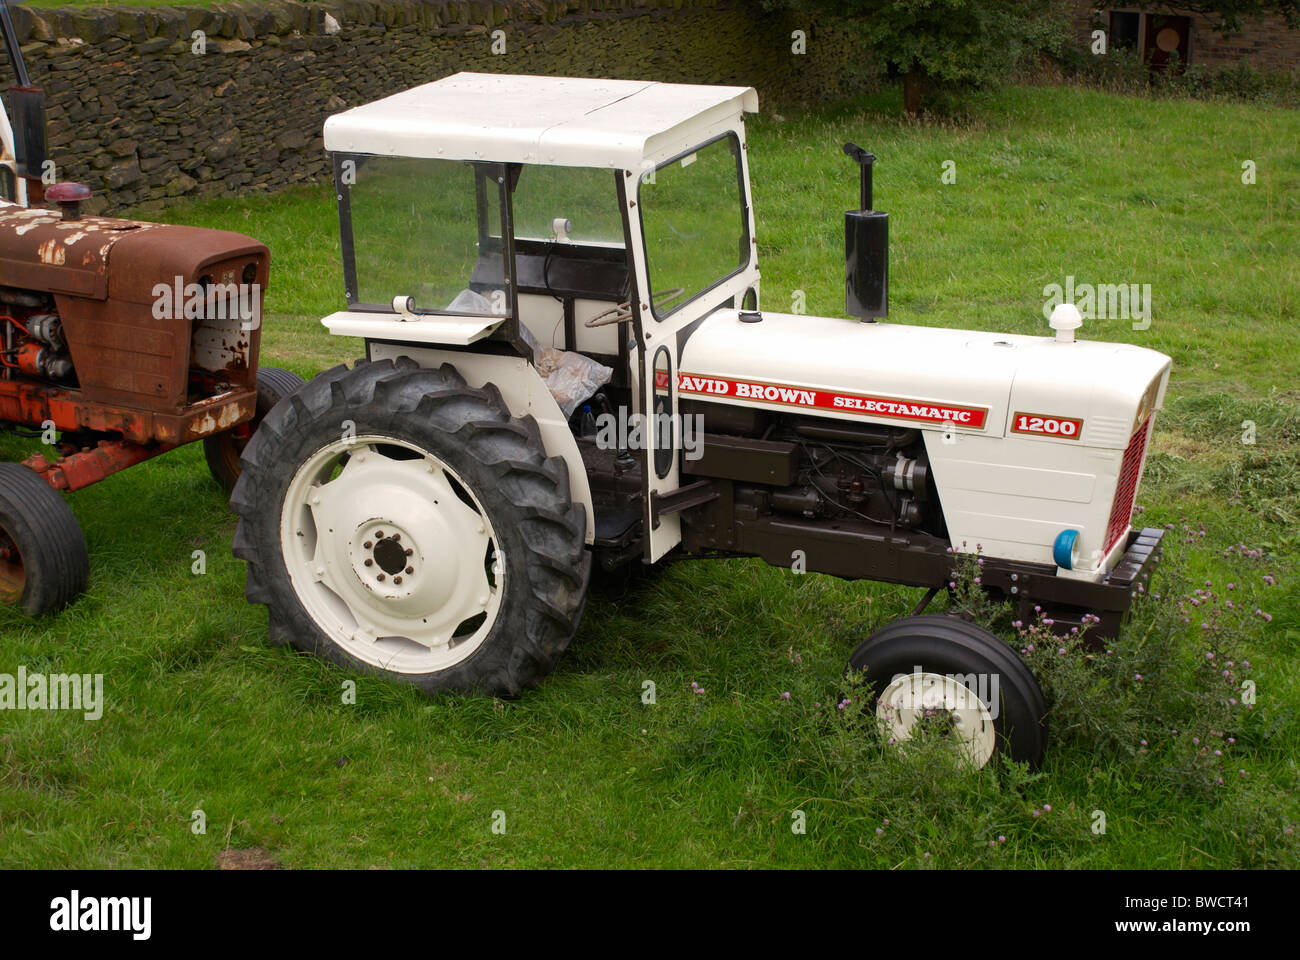 David Brown tractors in a farmers field. Stock Photo